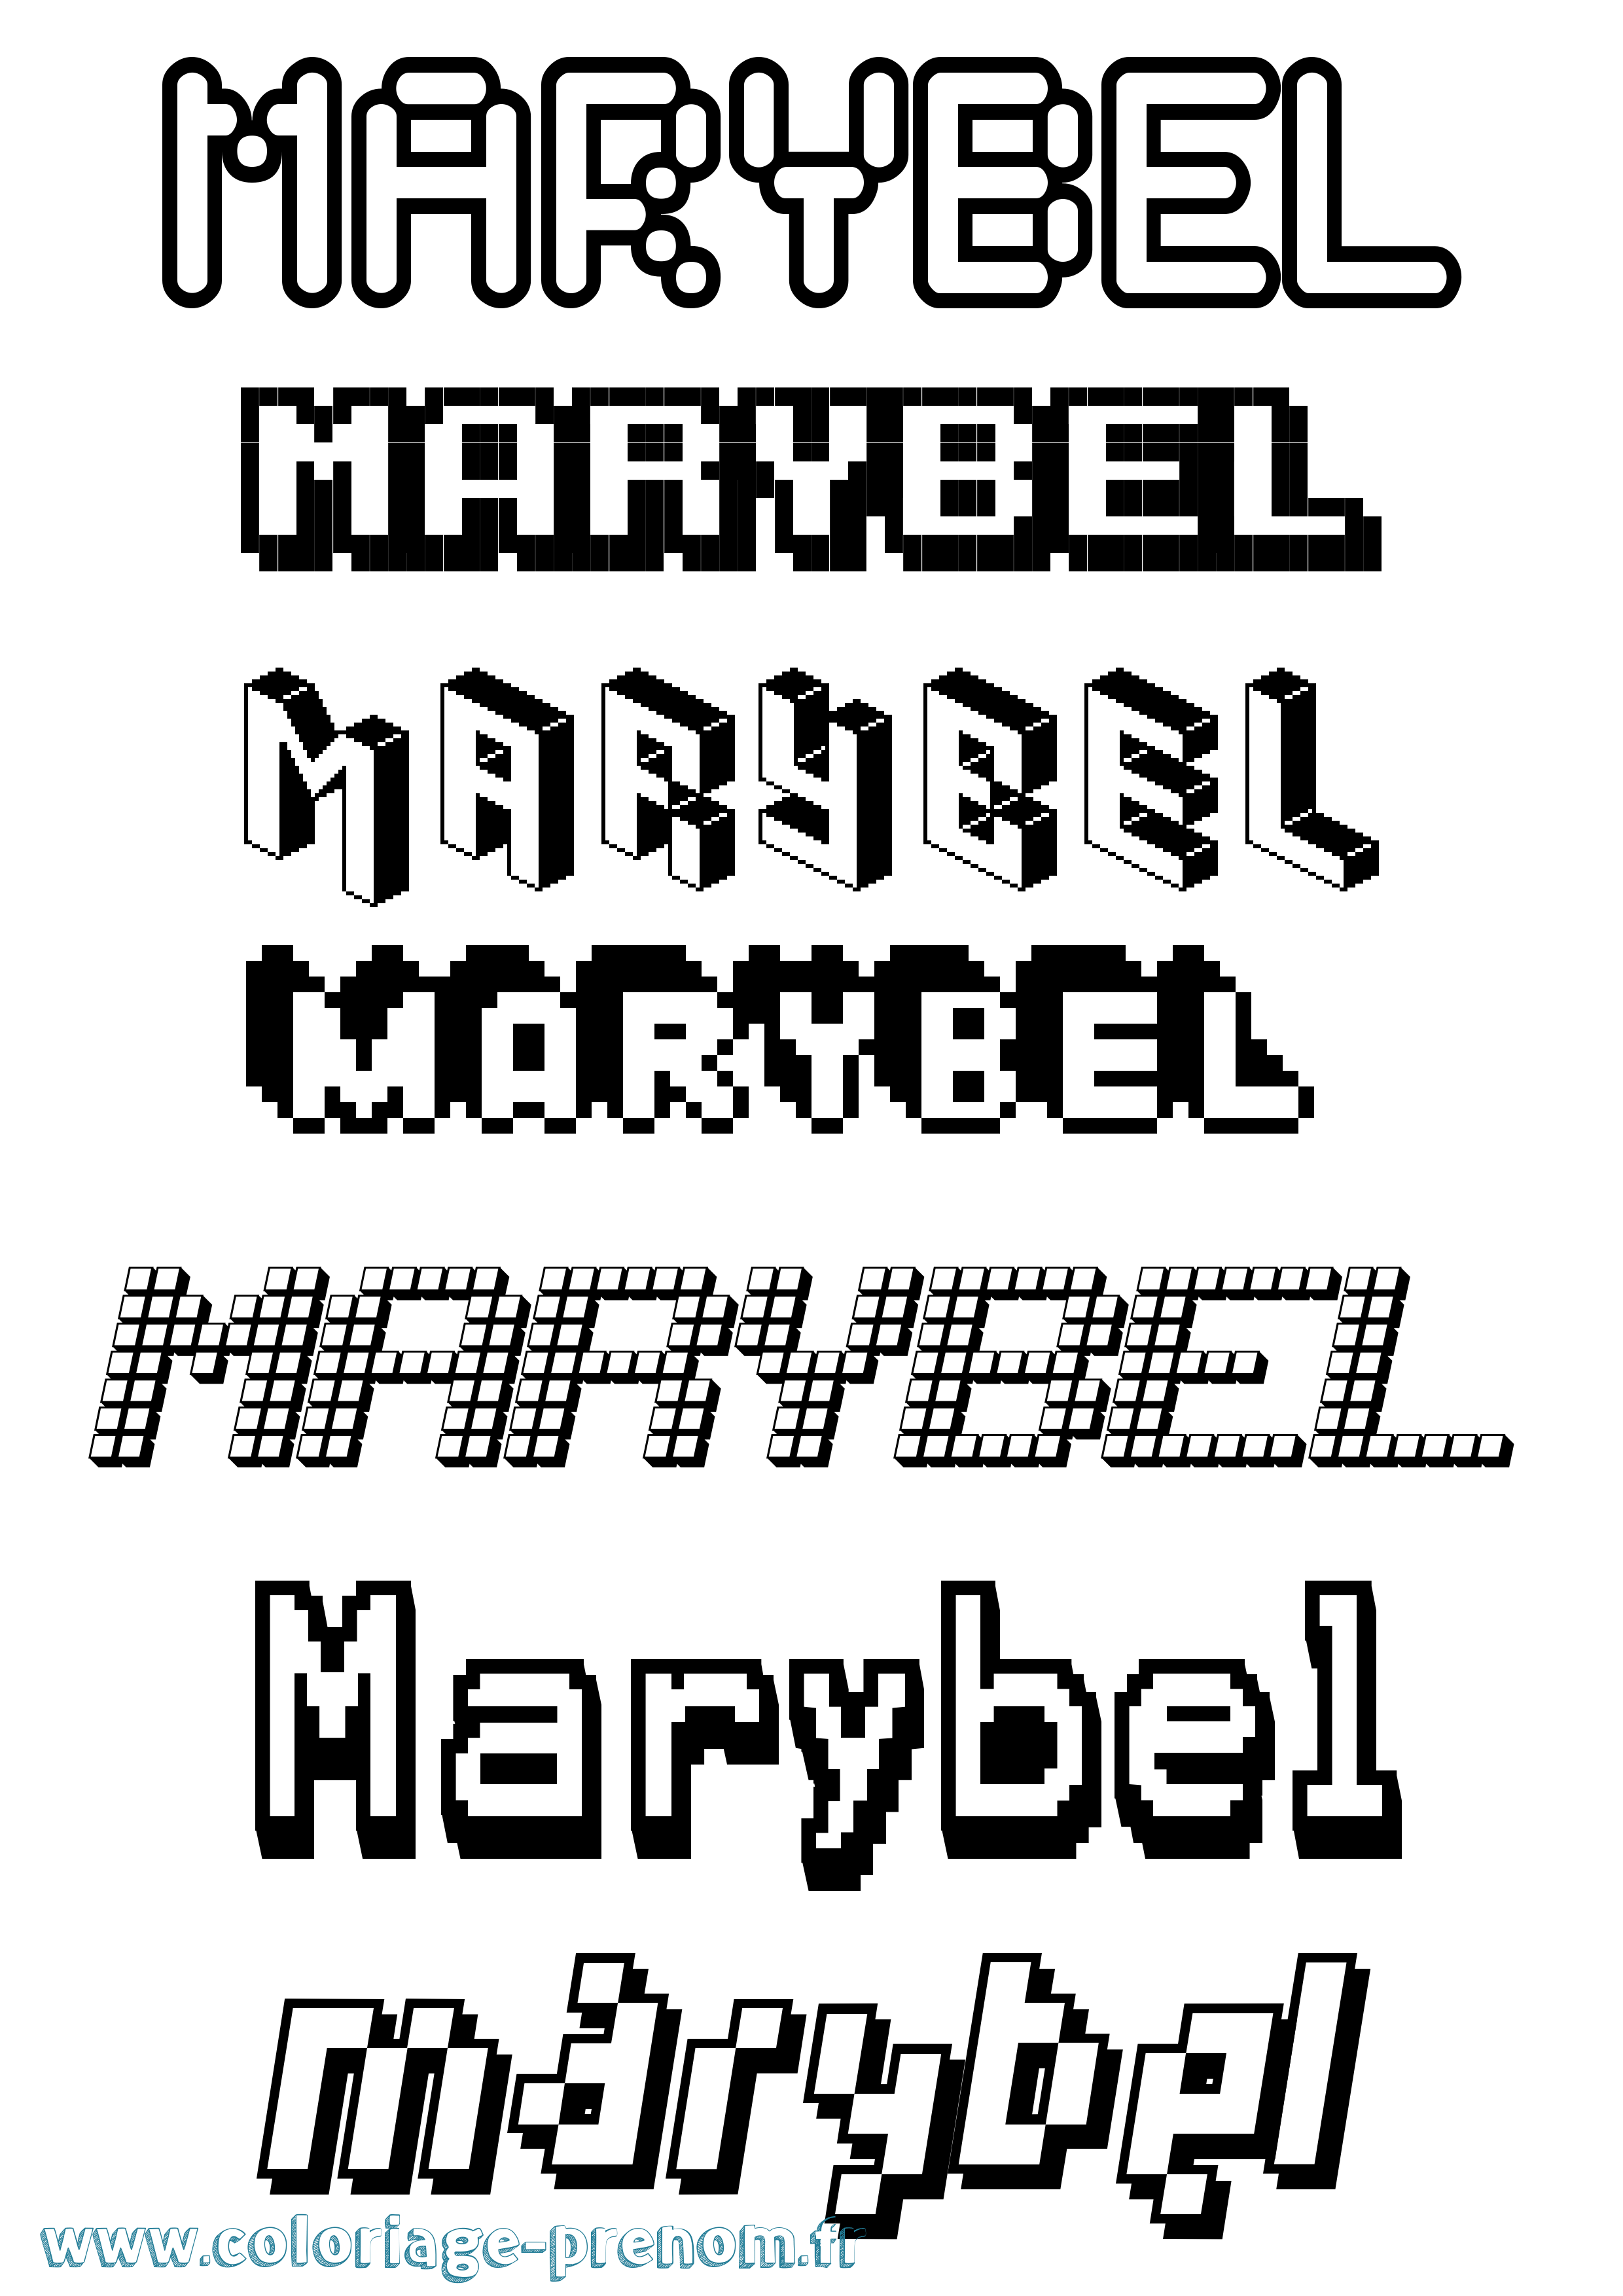 Coloriage prénom Marybel Pixel